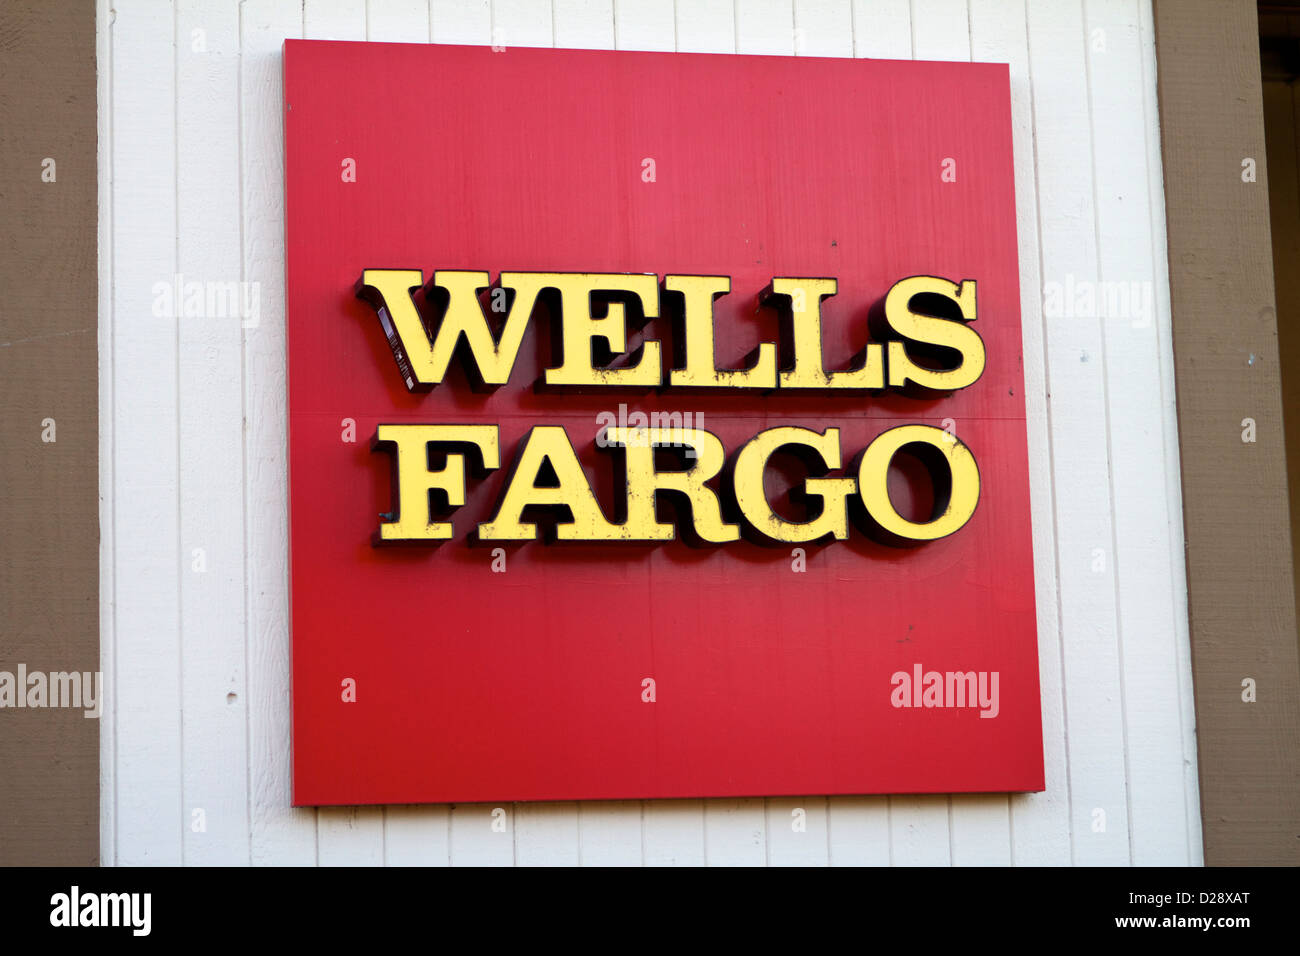 Wells Fargo Bank sign Stock Photo